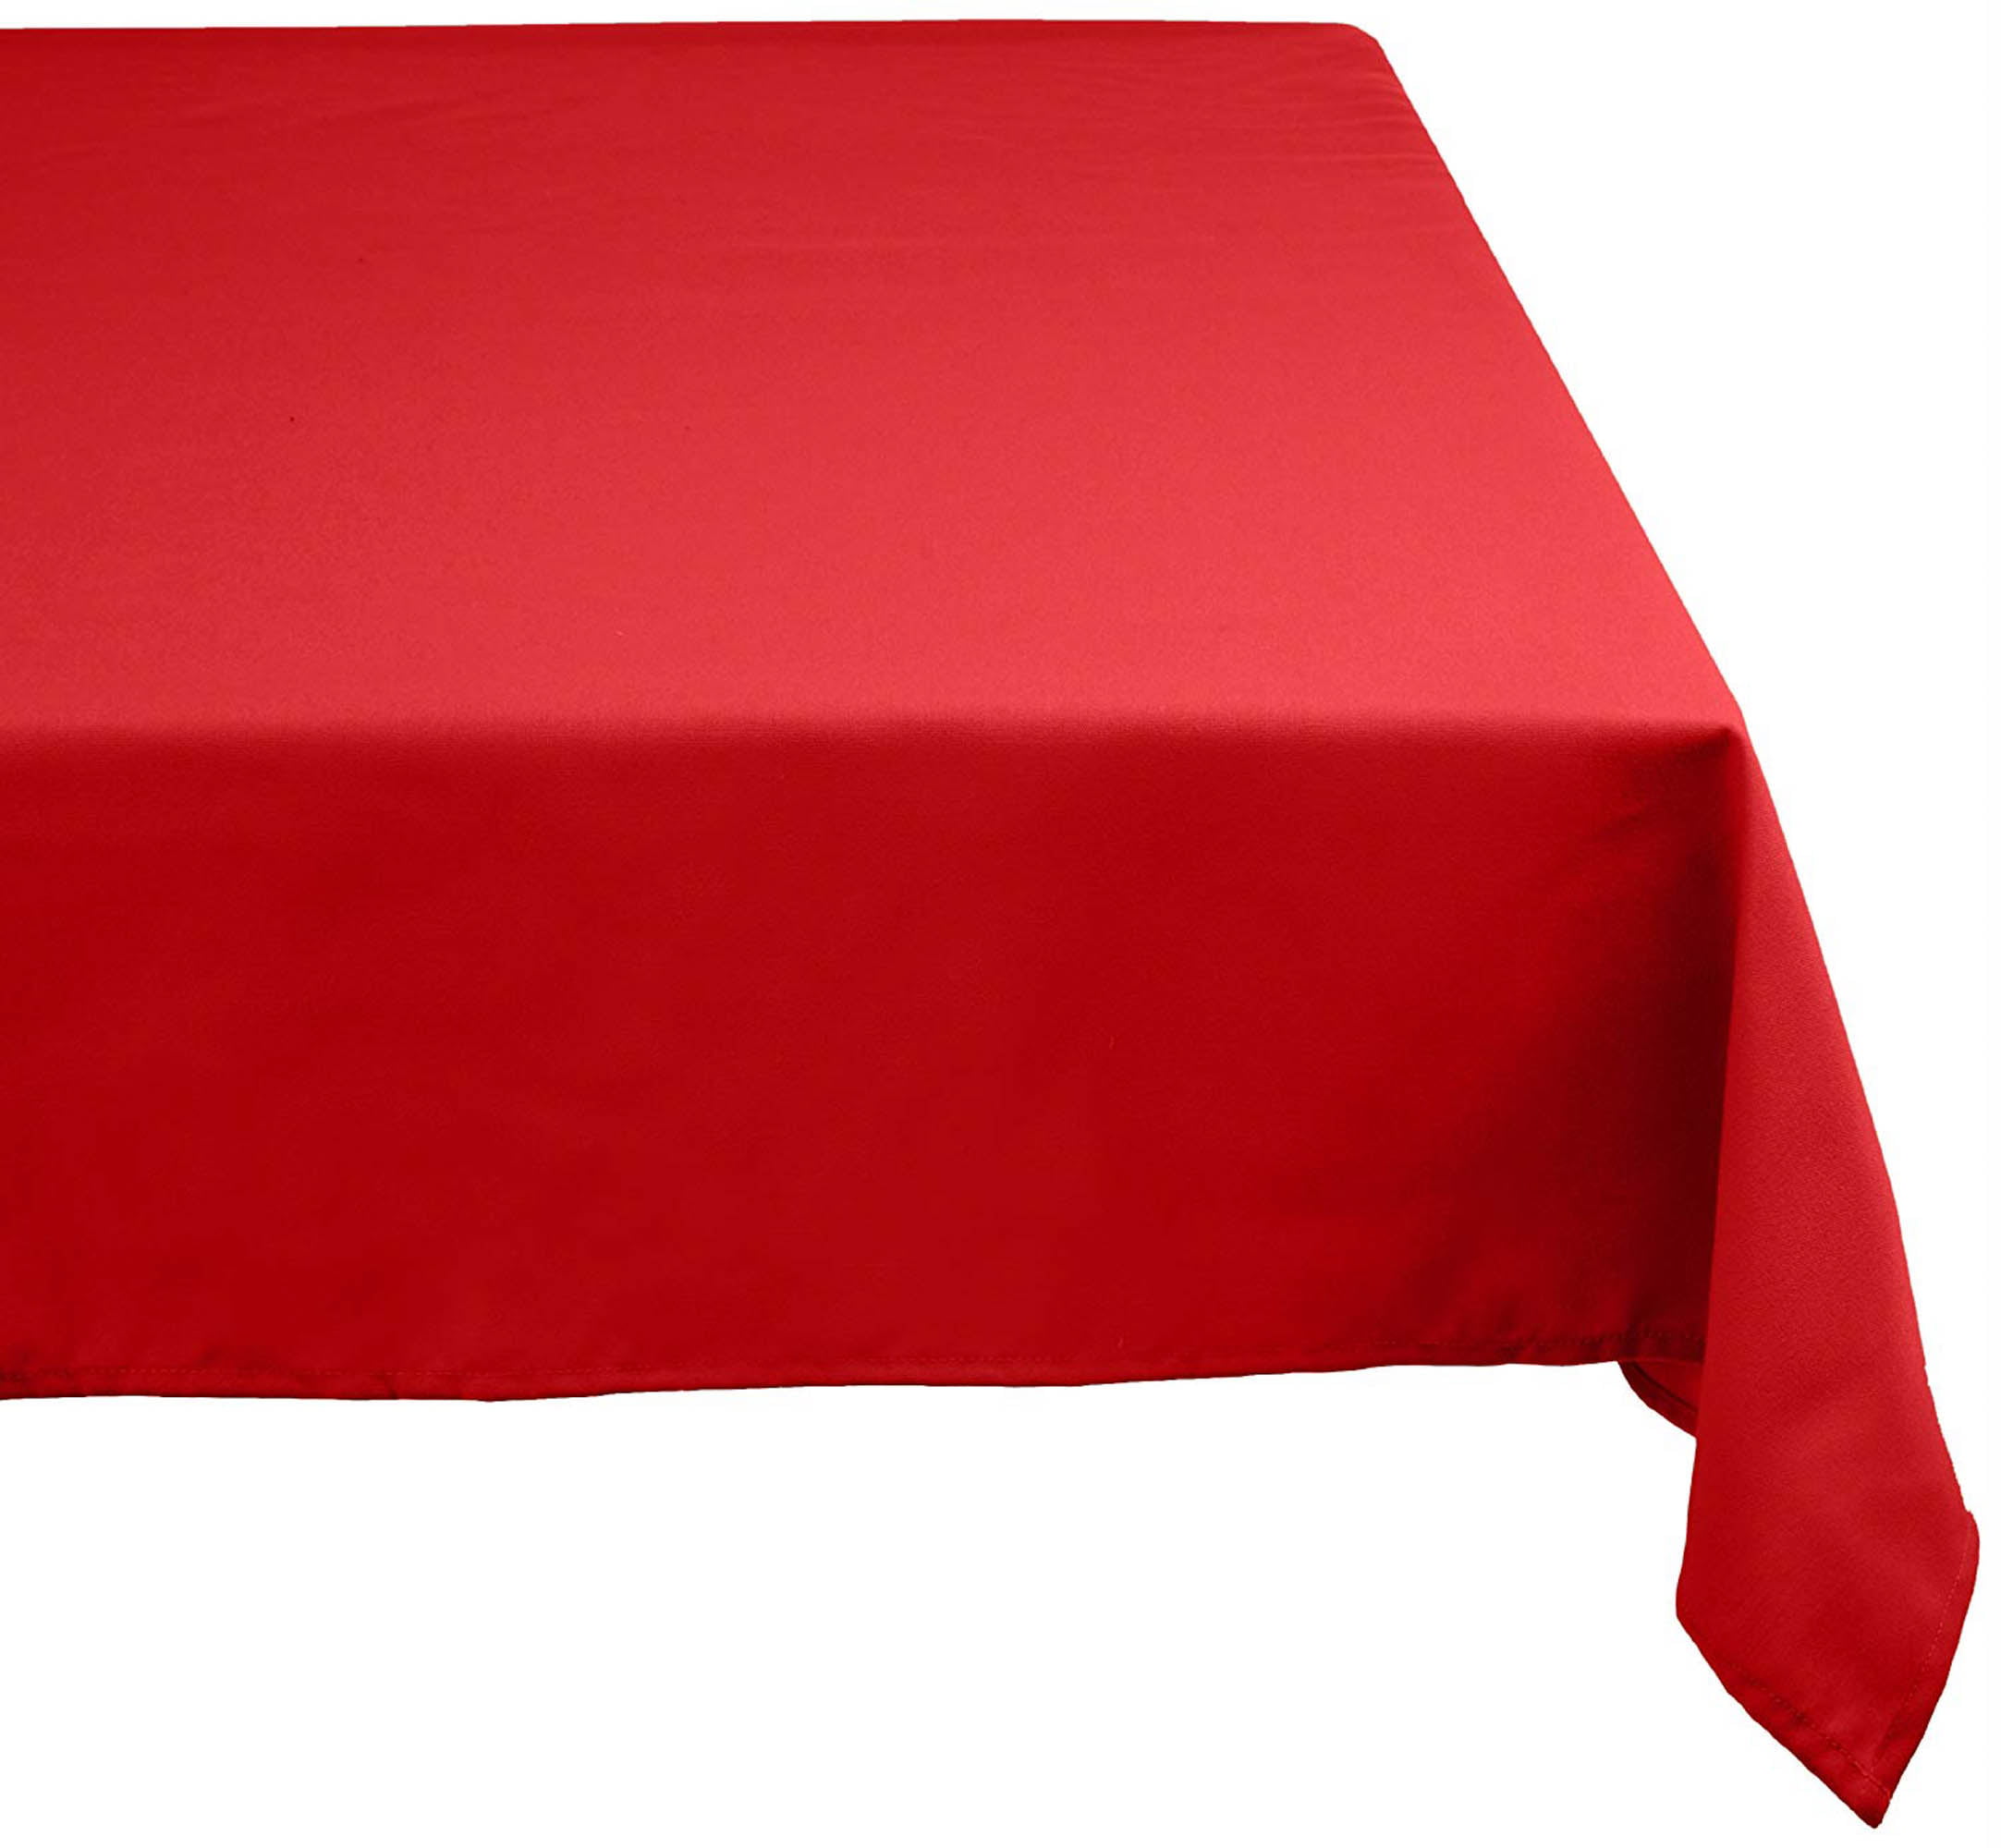 Tablecloths Tabel Cover Background Picnic Kitchen Cloth Floral Cotton Linen